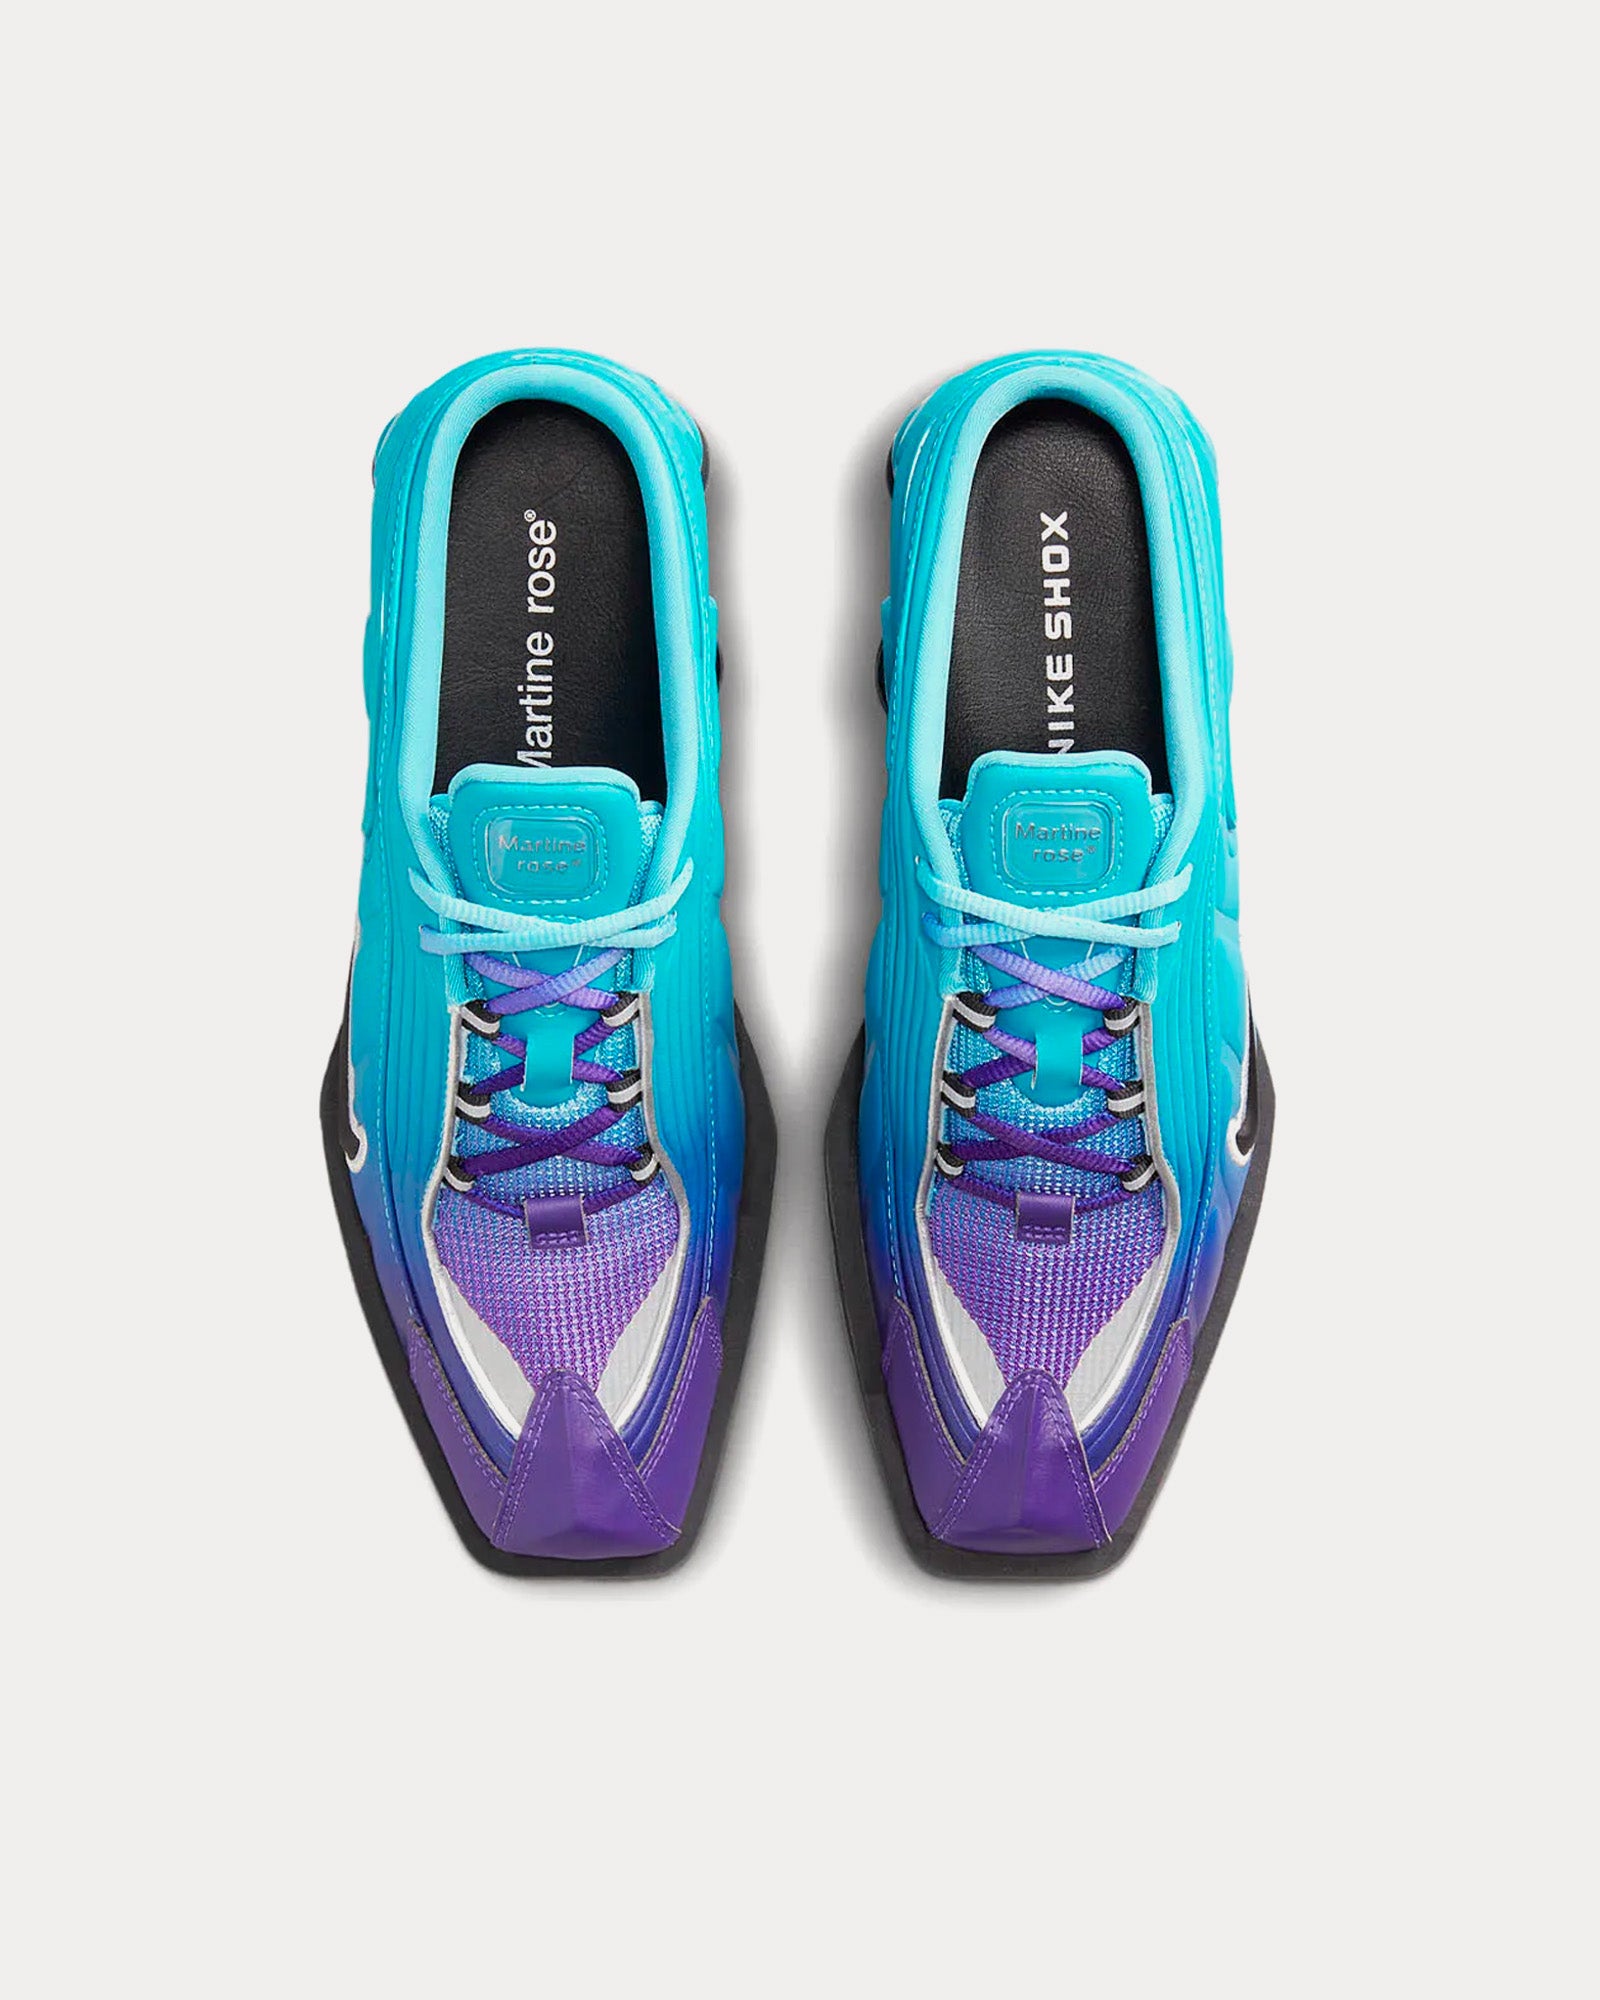 Nike x Martine Rose - Shox MR4 Scuba Blue Low Top Sneakers